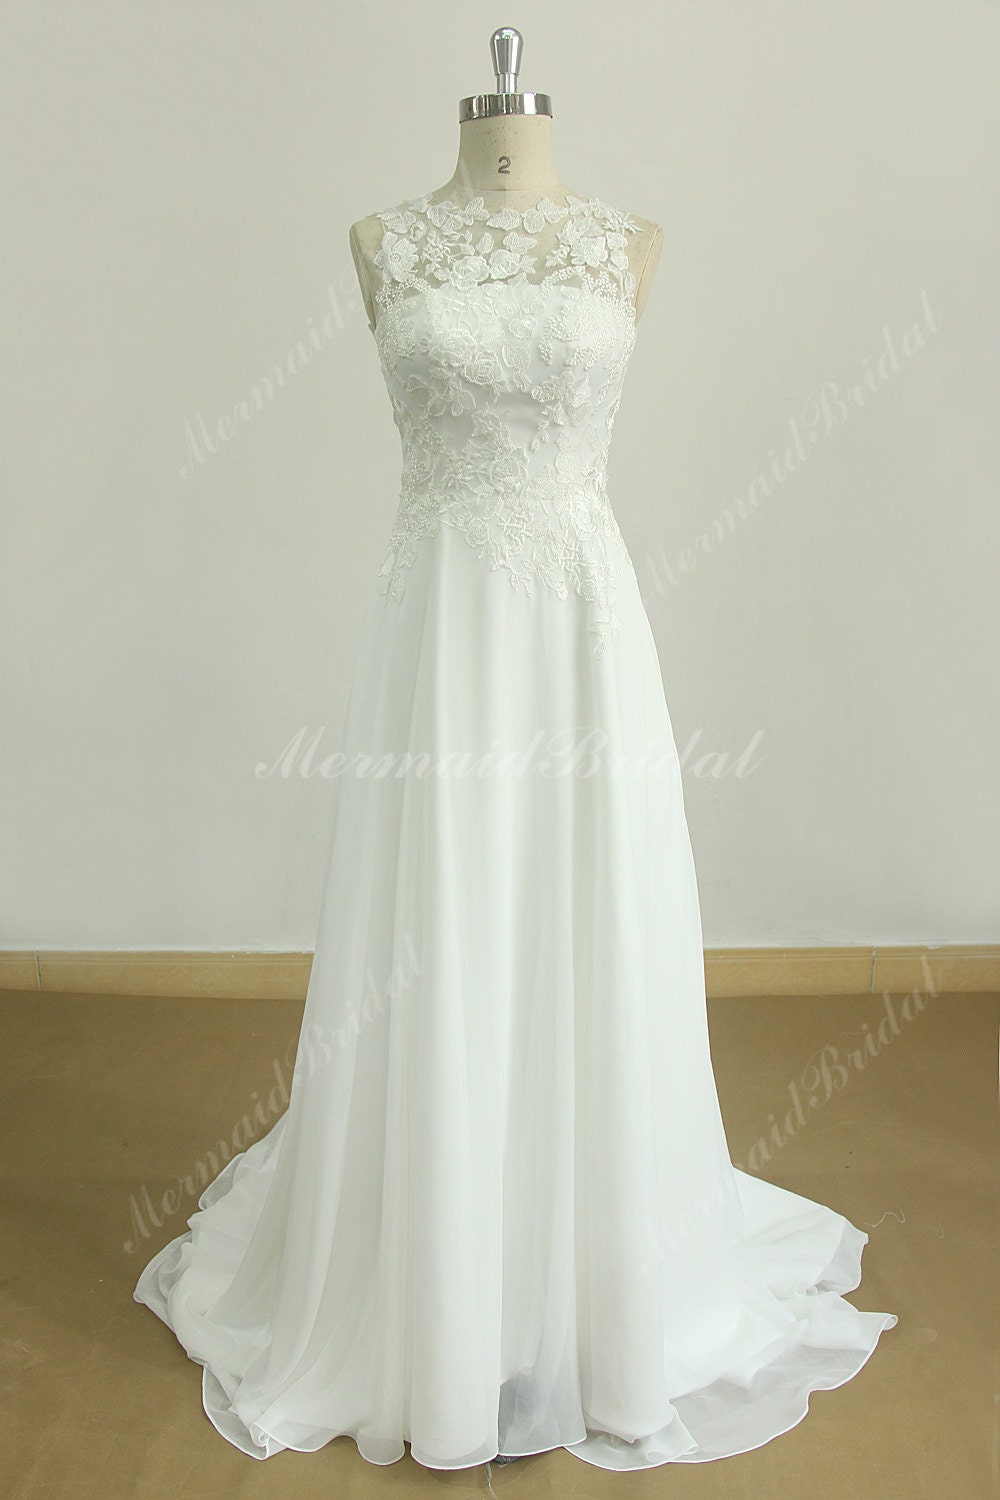 Romantic Ivory Chiffon Lace Casual Wedding Dress With Illusion | Etsy